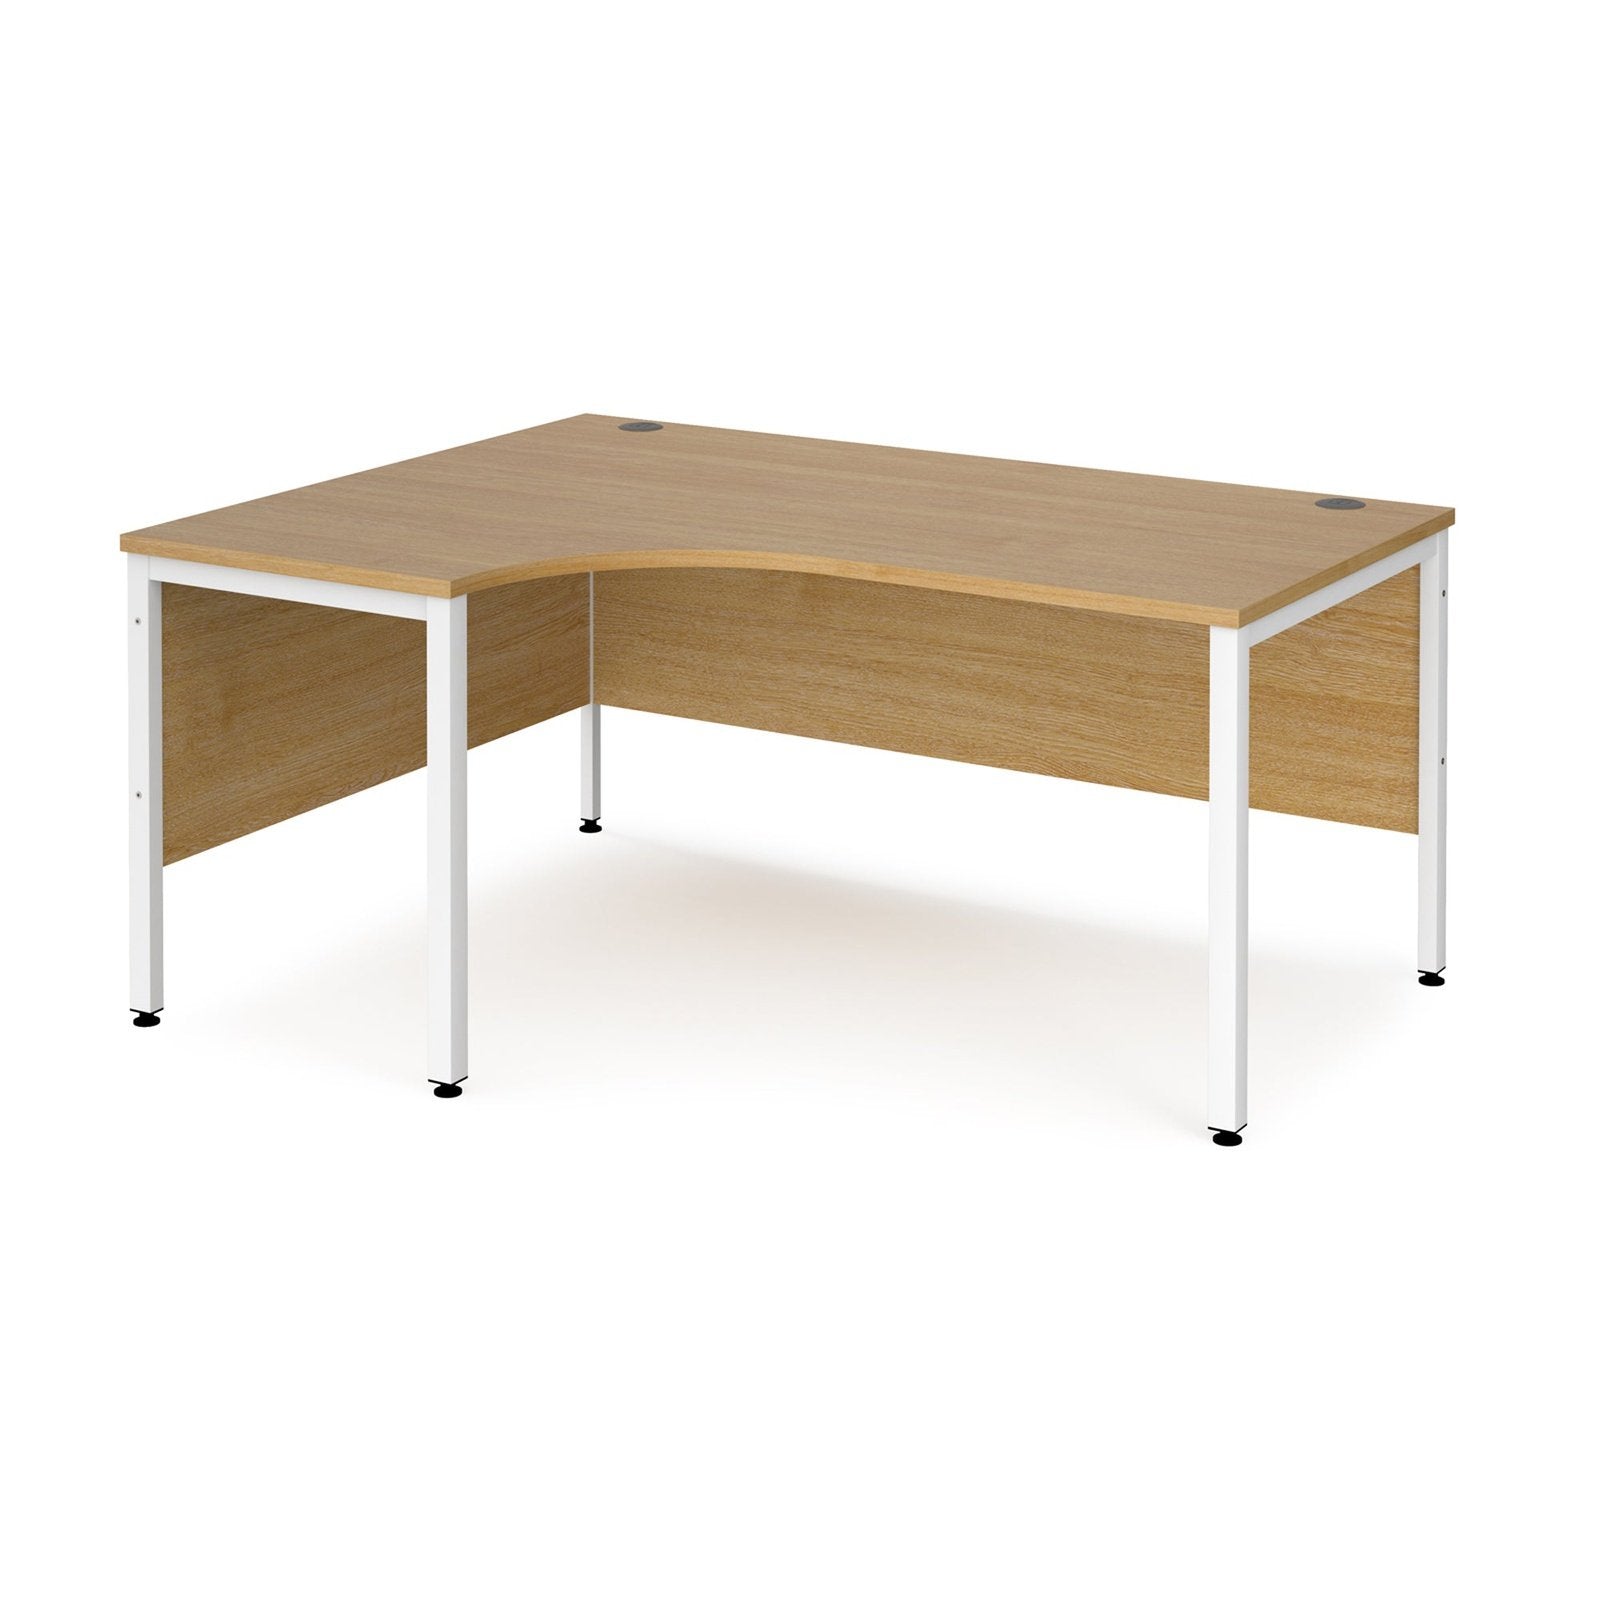 Maestro 25 bench leg left hand ergonomic desk - Office Products Online